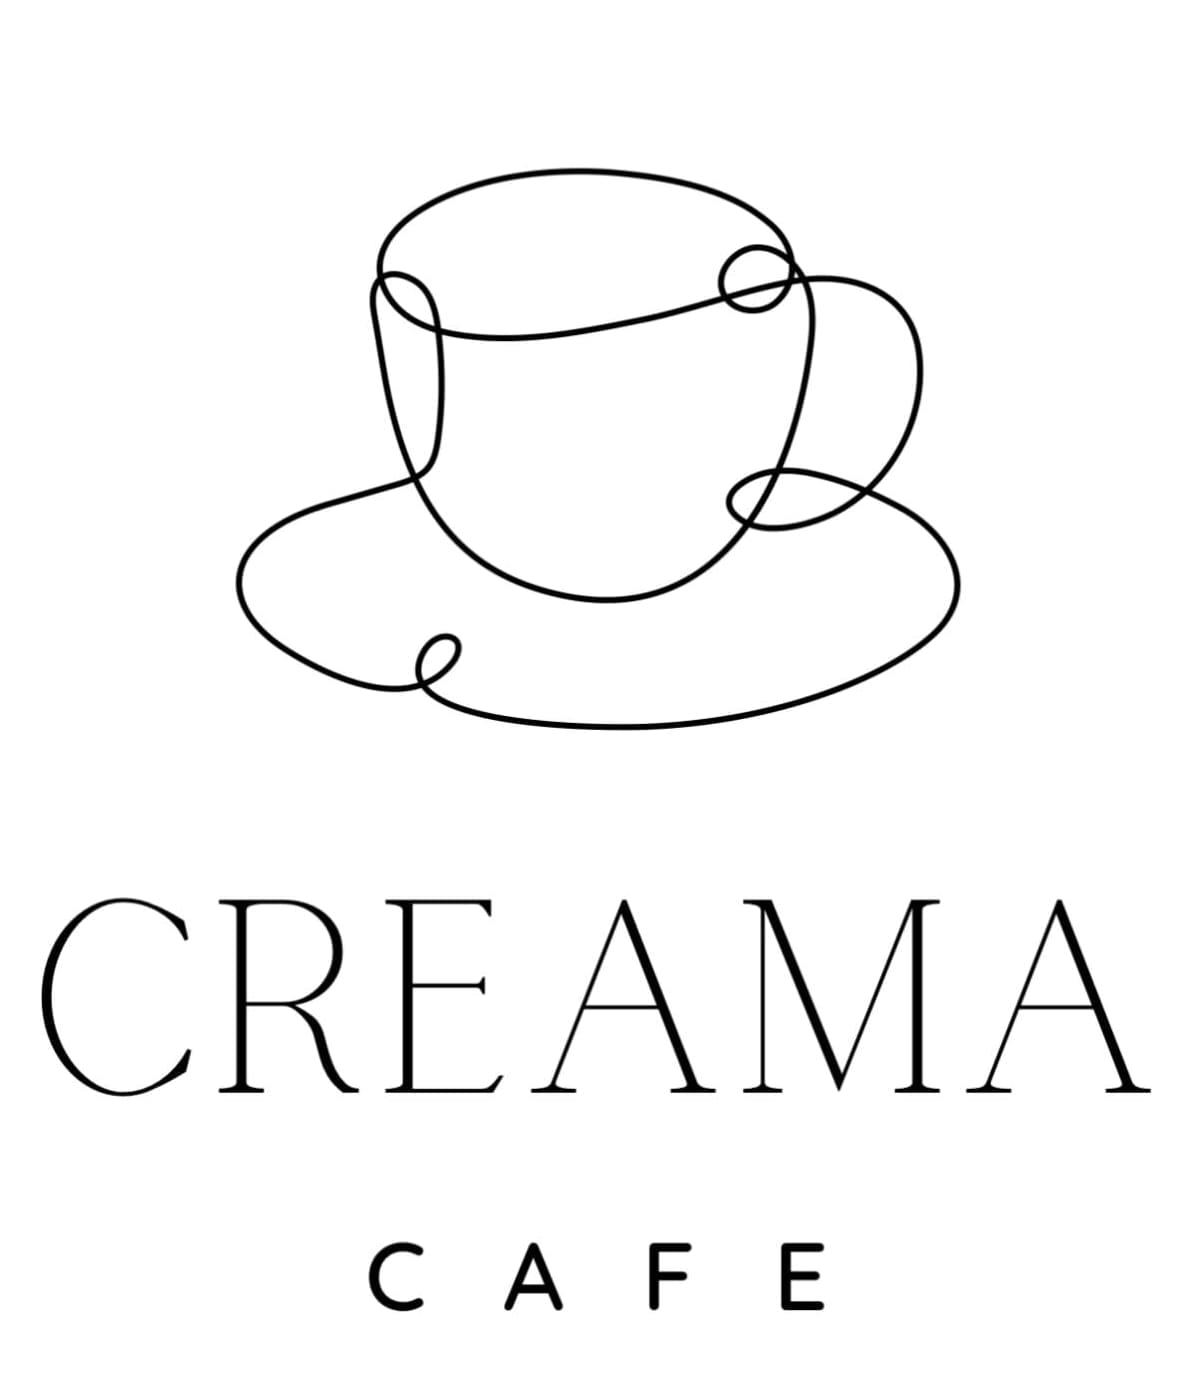 Creama Cafe